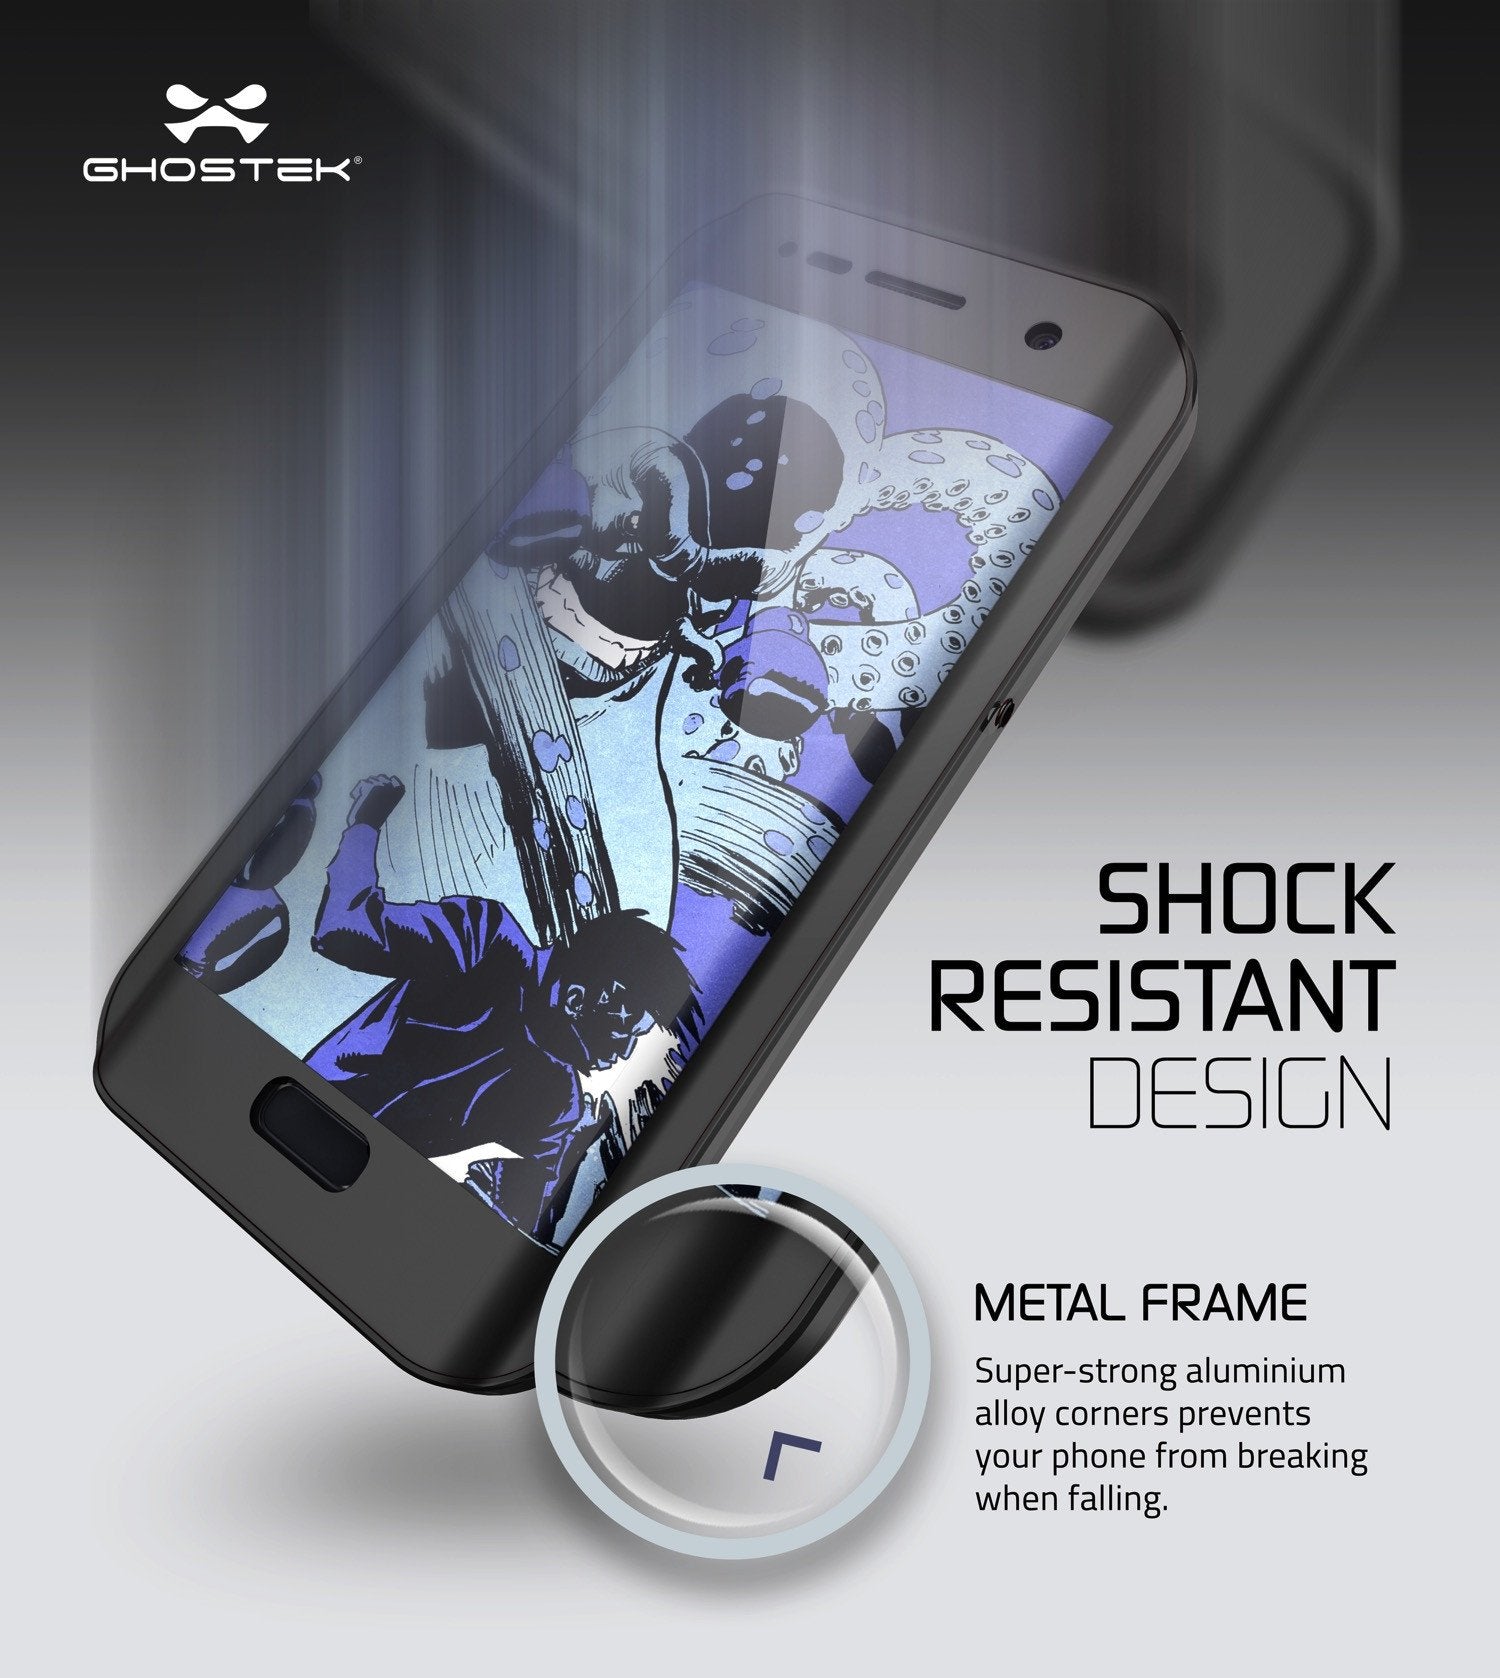 Galaxy S7 EDGE Waterproof Case, Ghostek Atomic 2.0 Black  Shock/Dirt/Snow Proof | Lifetime Warranty